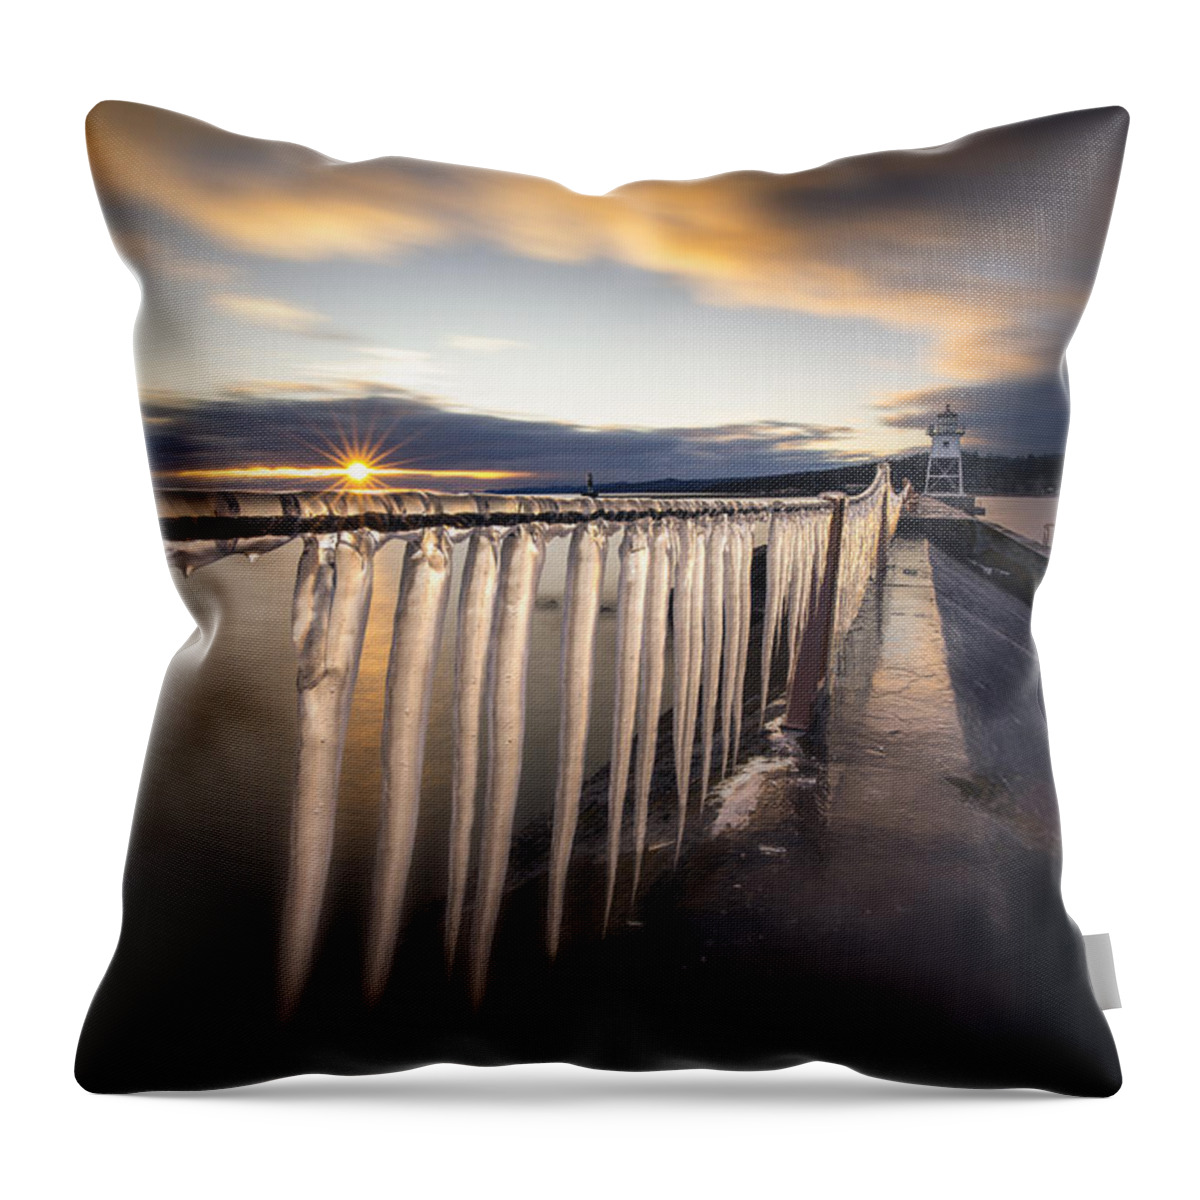 Canada Throw Pillow featuring the photograph Sunset over Grand Marais Lighthouse Breakwall by Jakub Sisak